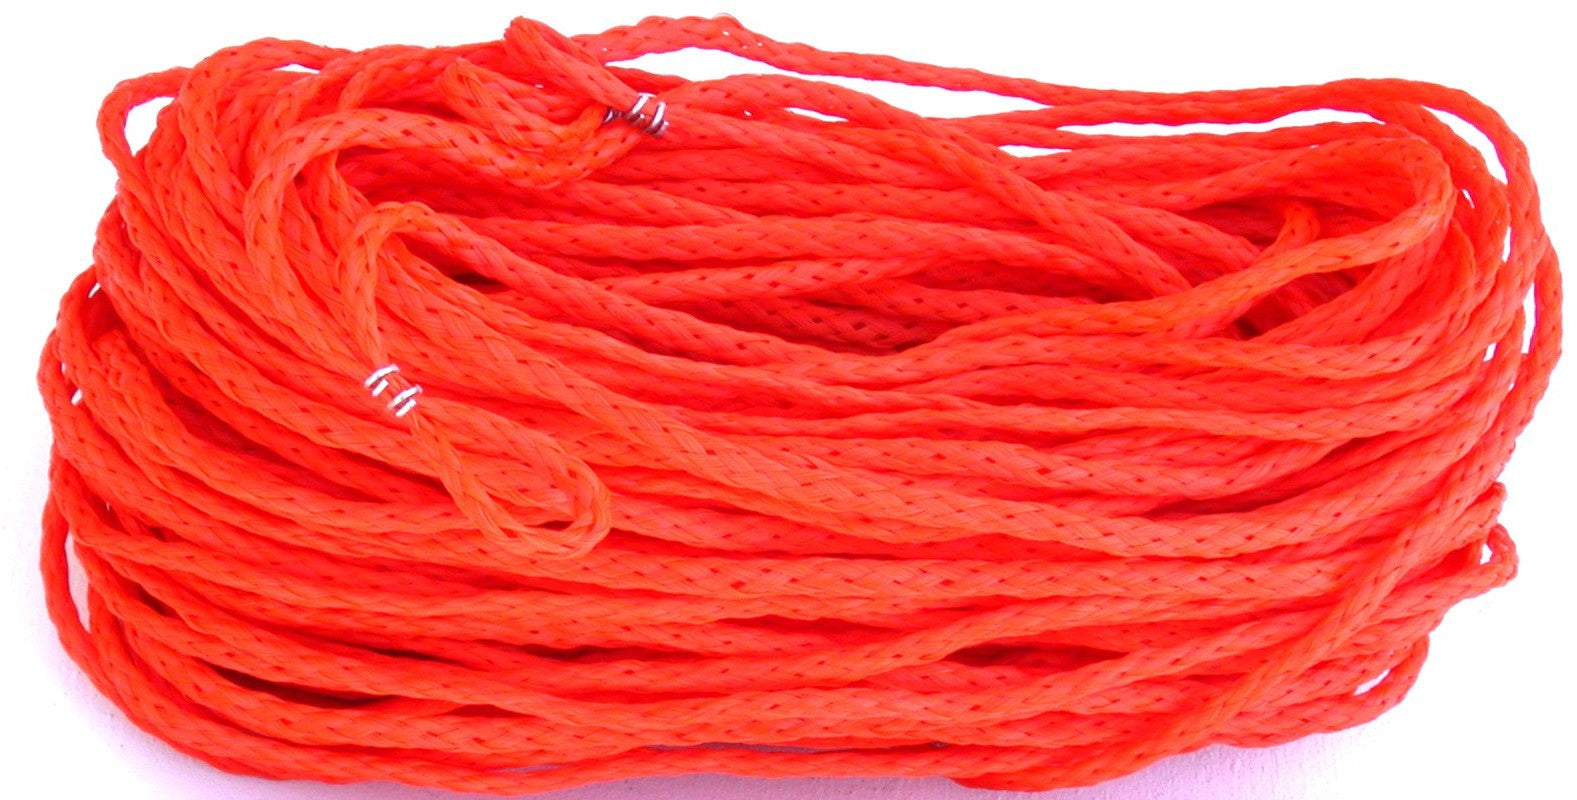 M25O-orange 1/4-inch rope non-adjustable grass boundary